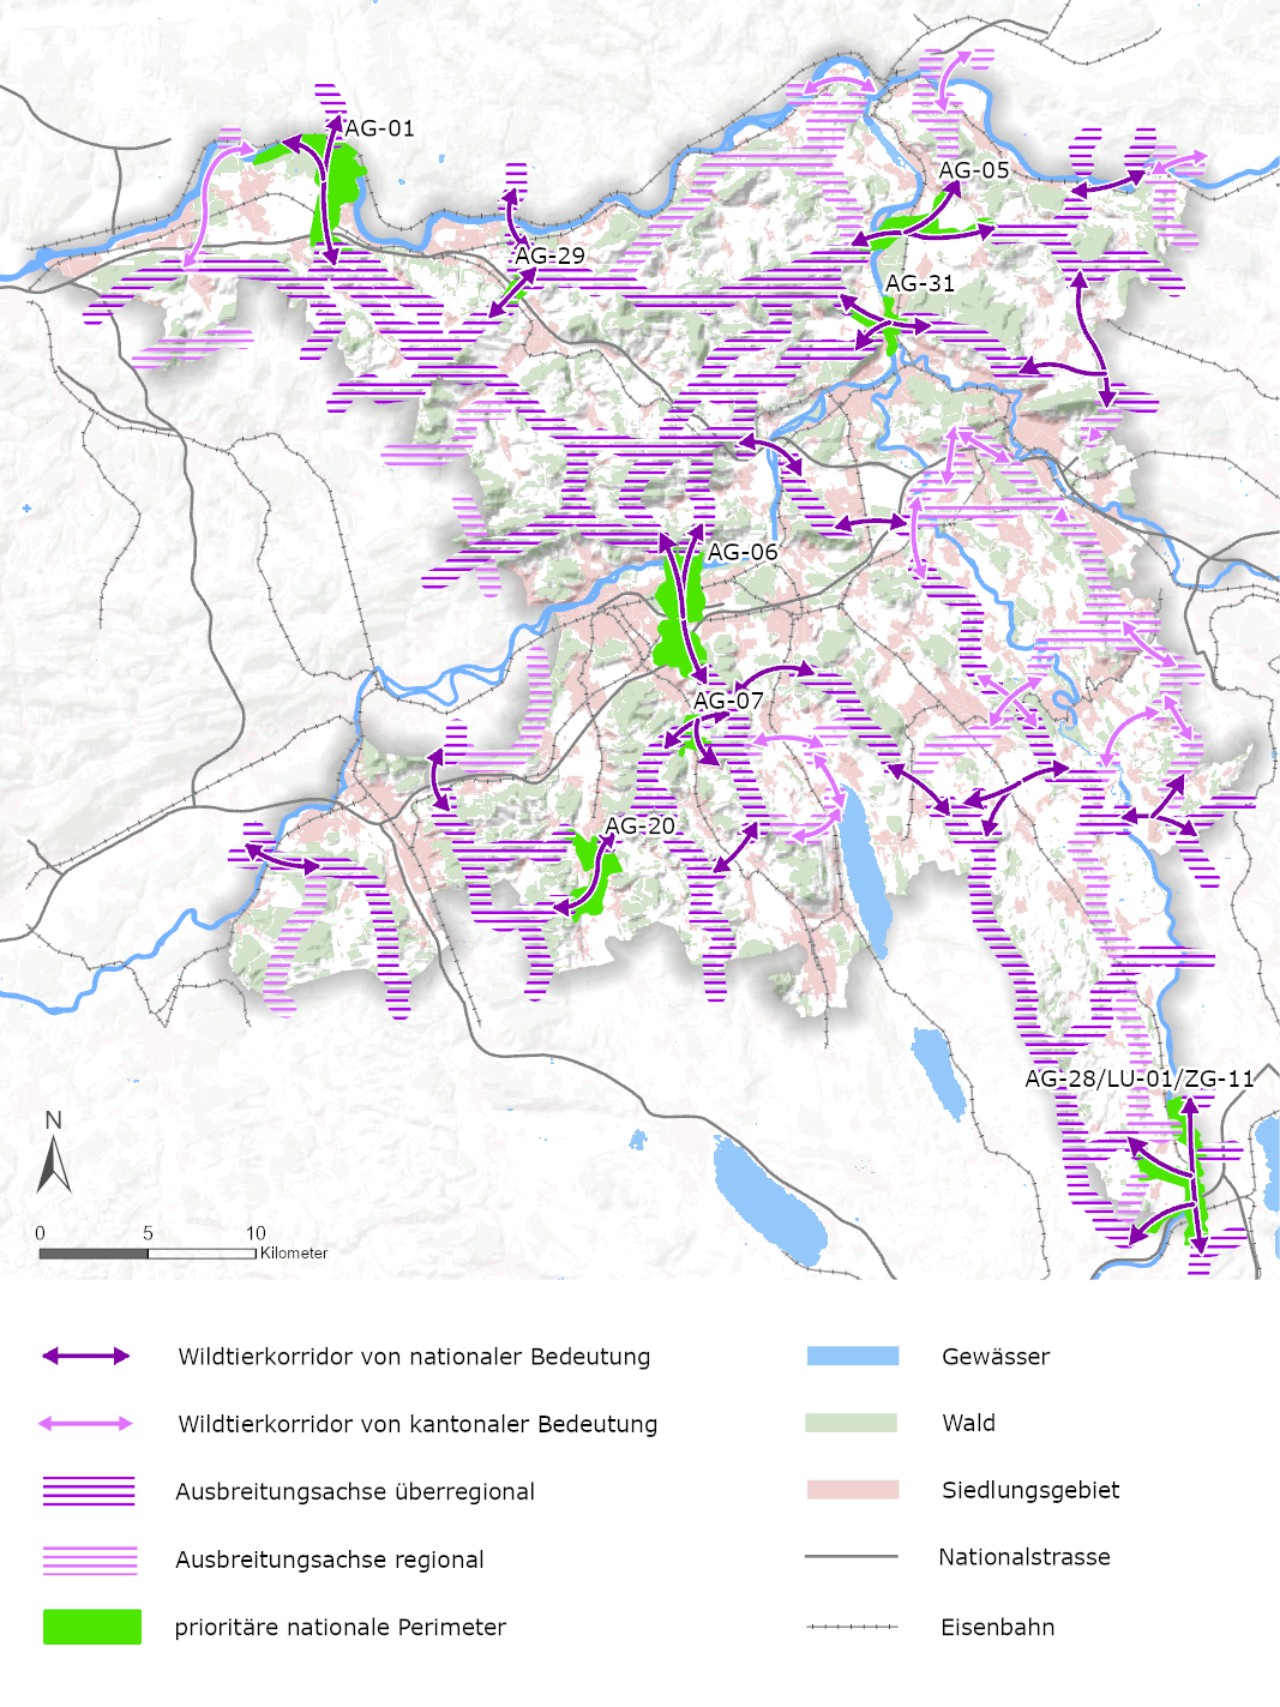 Die schematische Kartez zeigt die Wildtierkorridore nationaler und kantonaler Bedeutung sowie die prioriätr nationalen Korridore